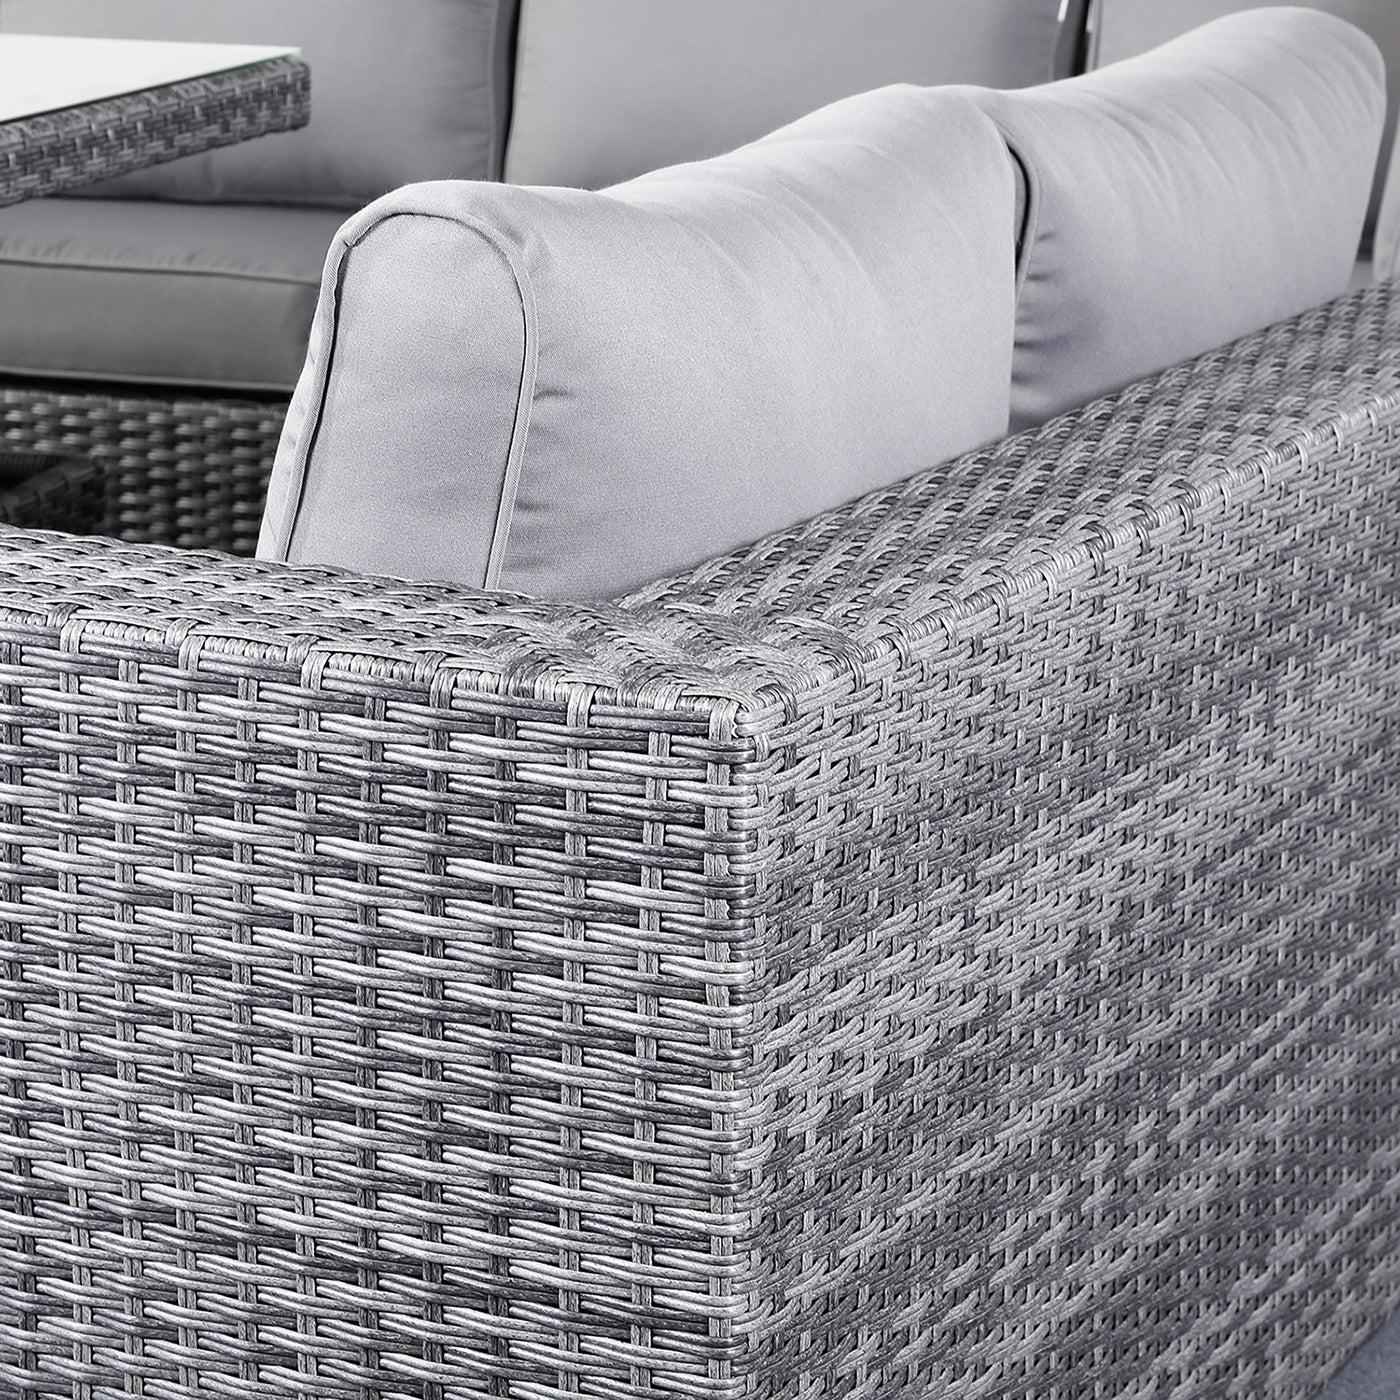 Rose Aluminium Corner in Grey weave and Grey Cushions (#105)